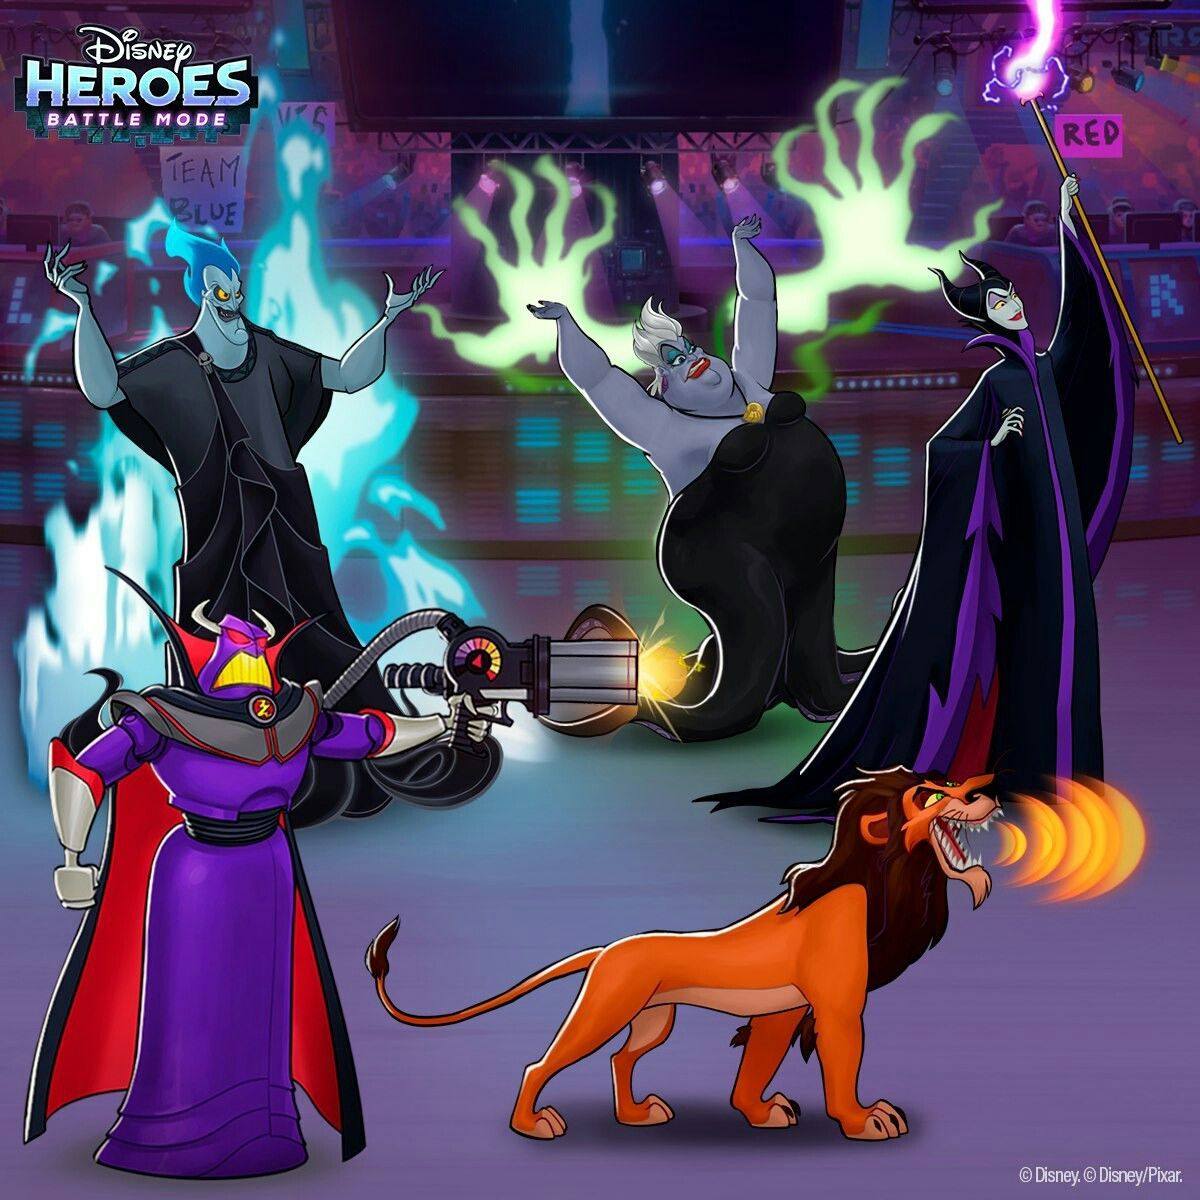 Disney Heroes: Battle mode. Disney art, Disney, Art